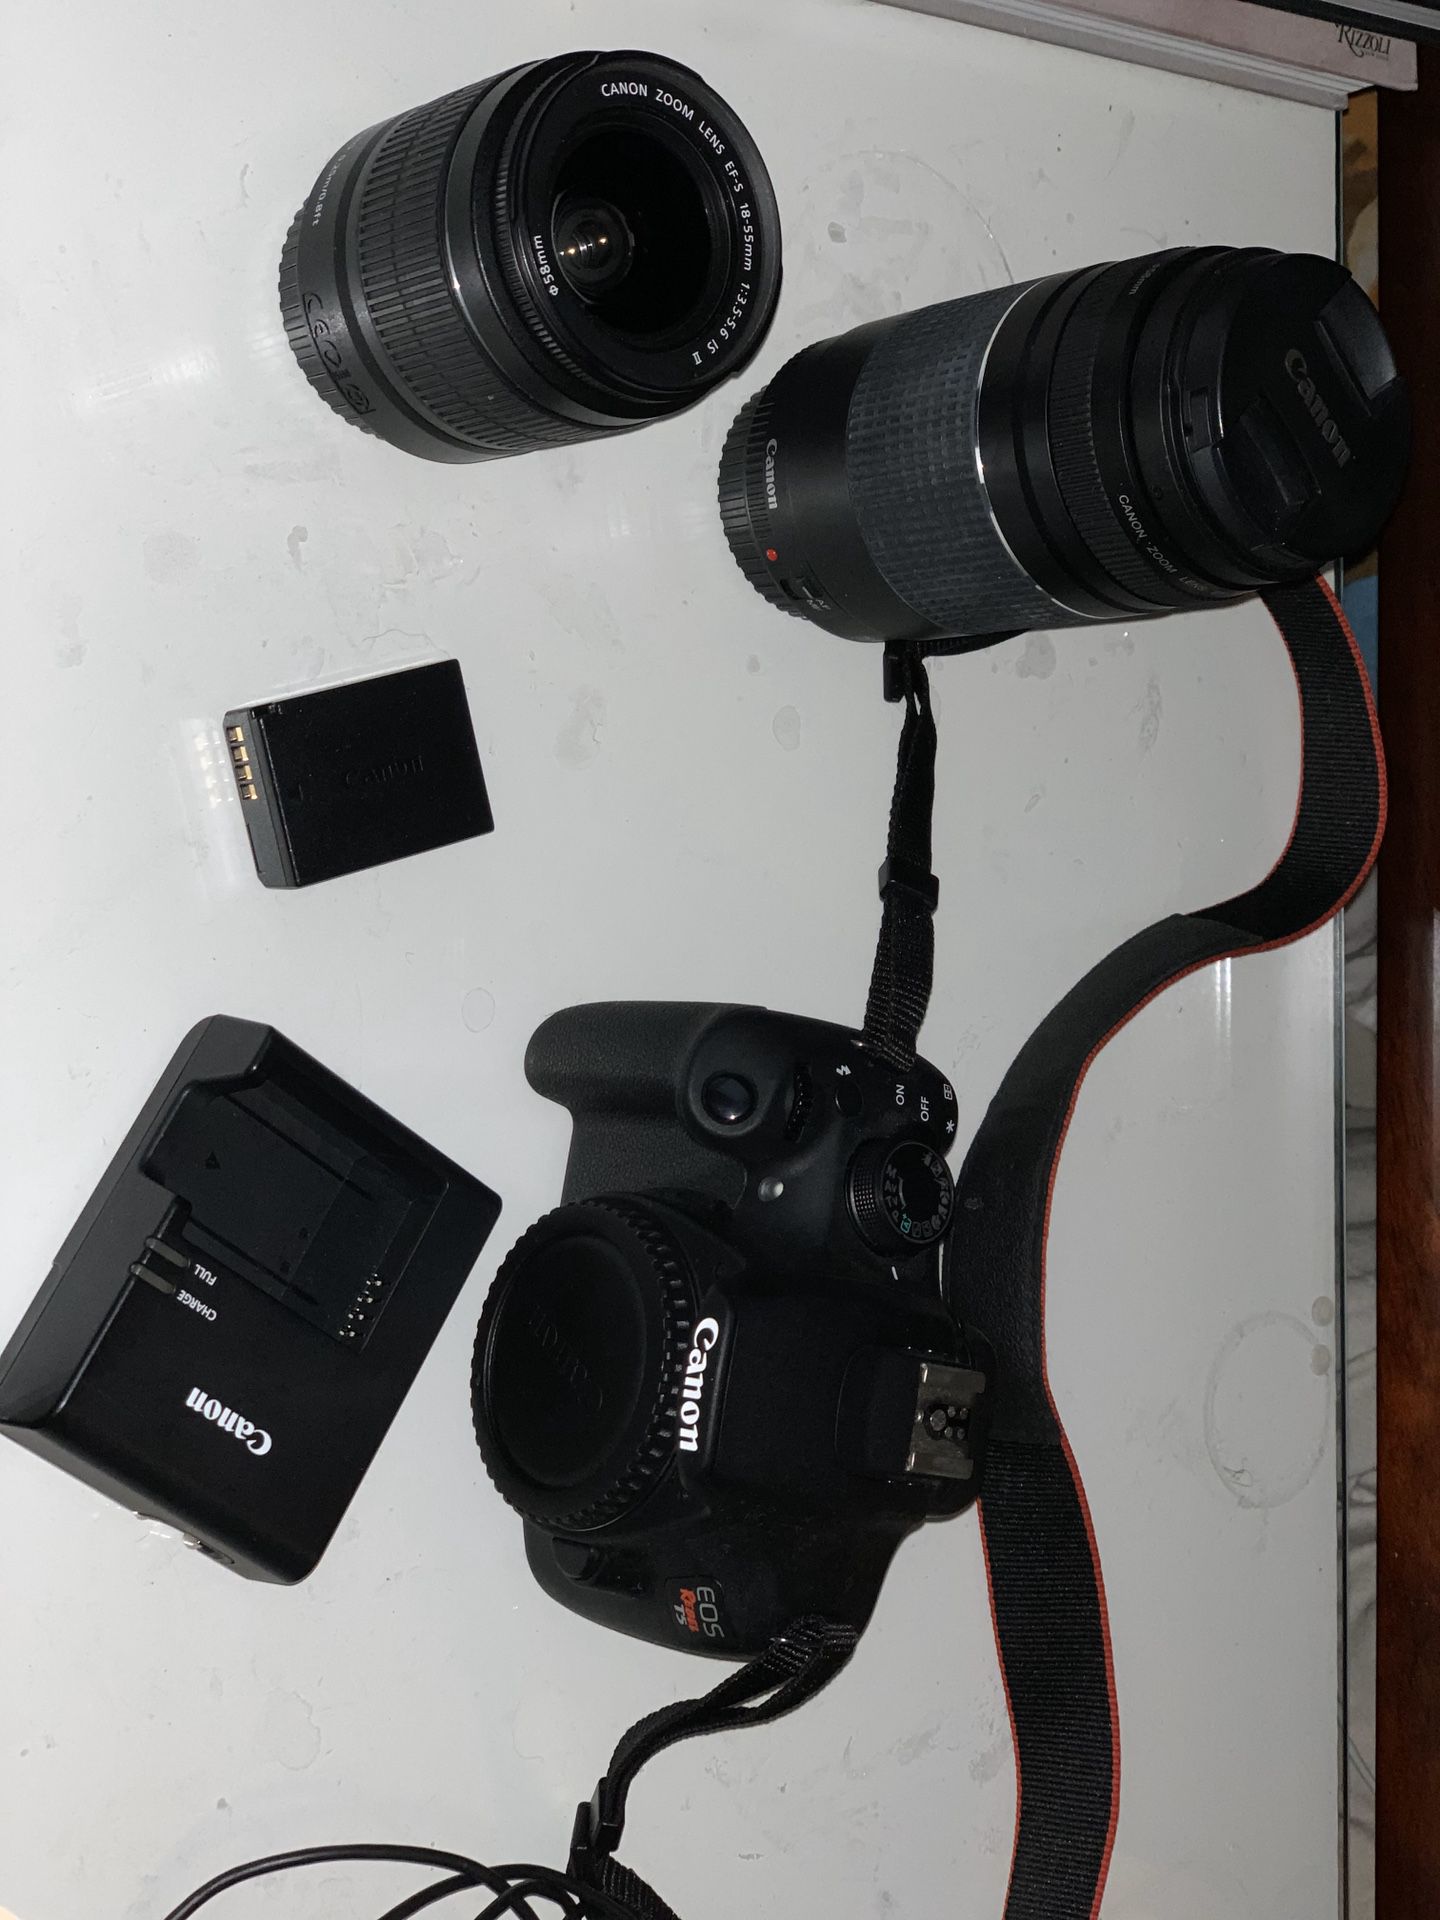 Canon EOS Rebel T5 18.0 MP SLR - Black - EF-S 18-55mm IS II Lens